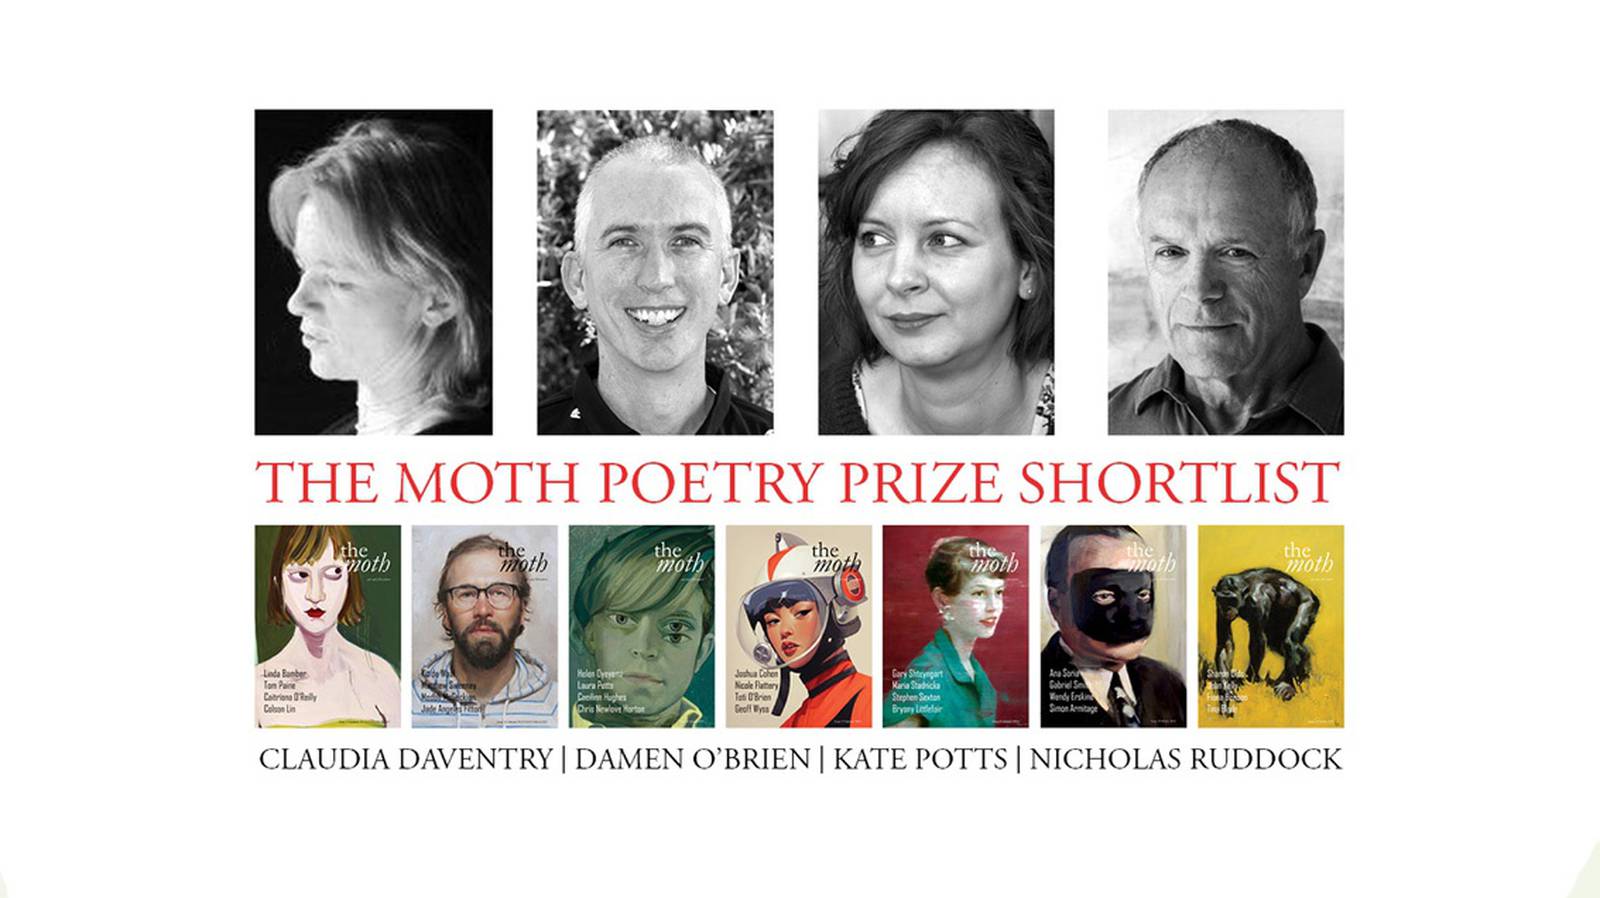 Claudia Rankine’s €10,000 Moth Poetry Prize shortlist spans the globe